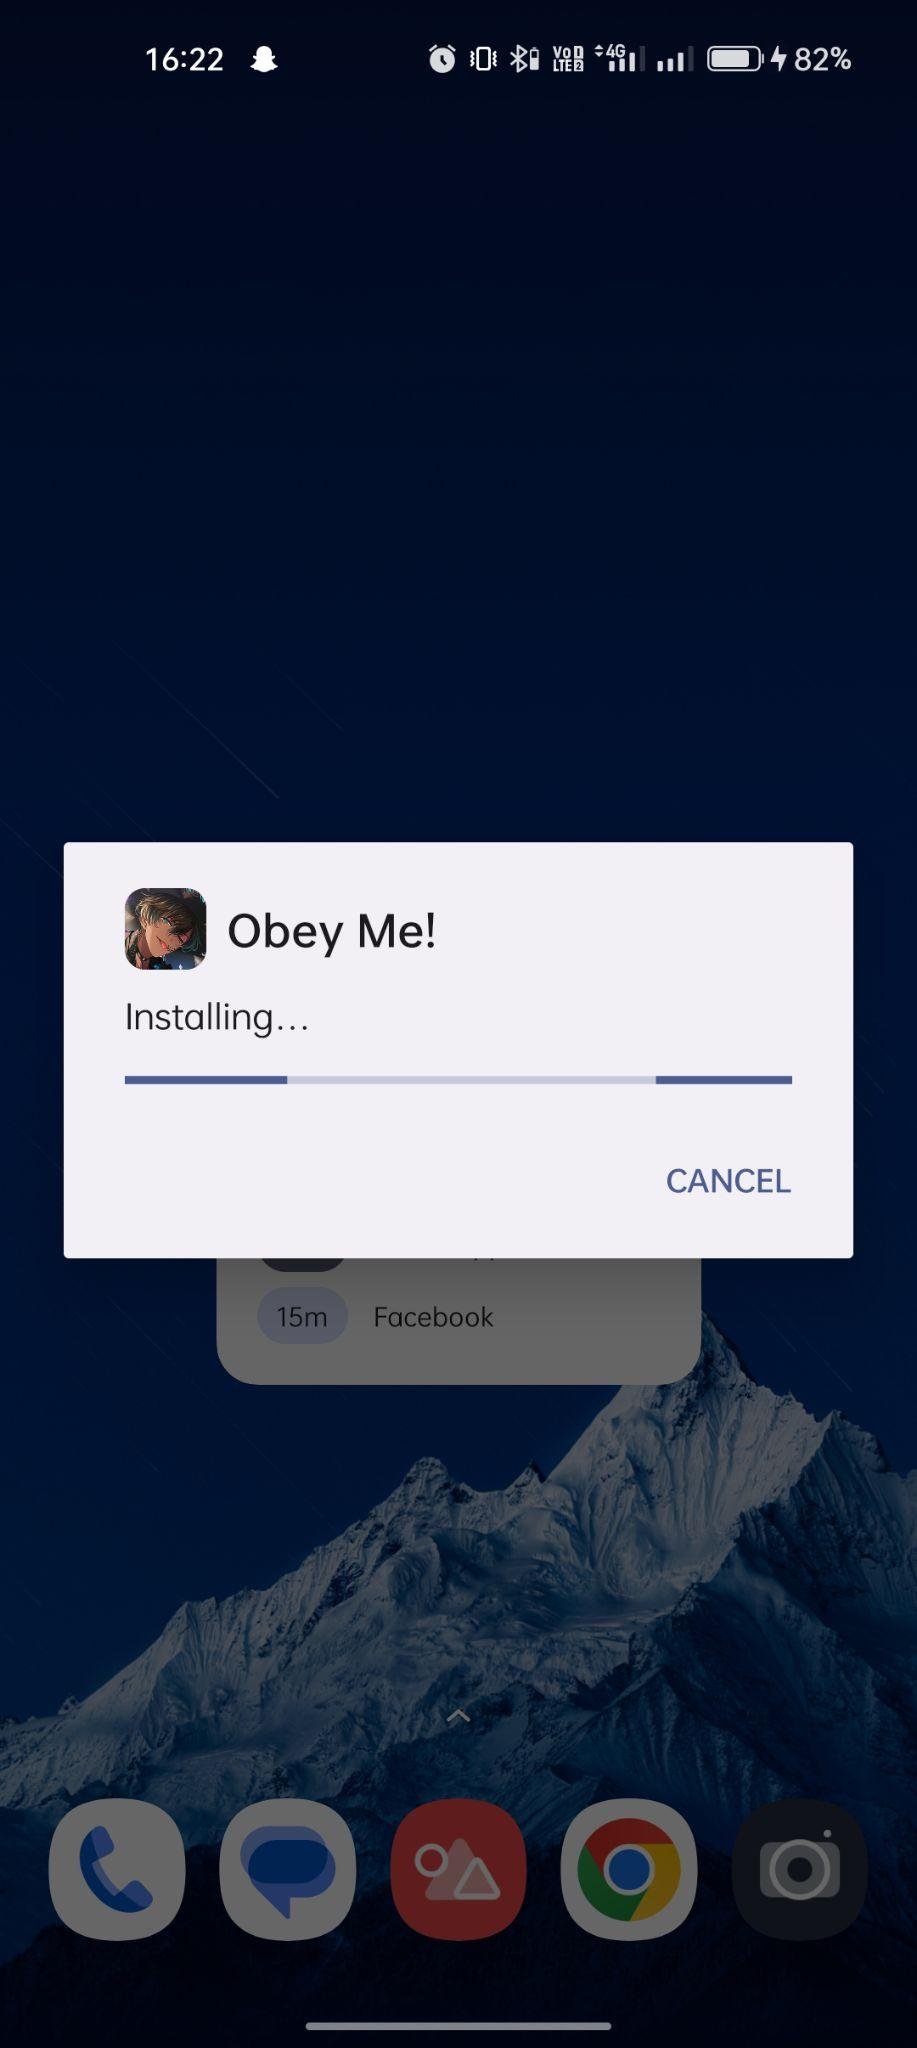 Obey Me! apk installing